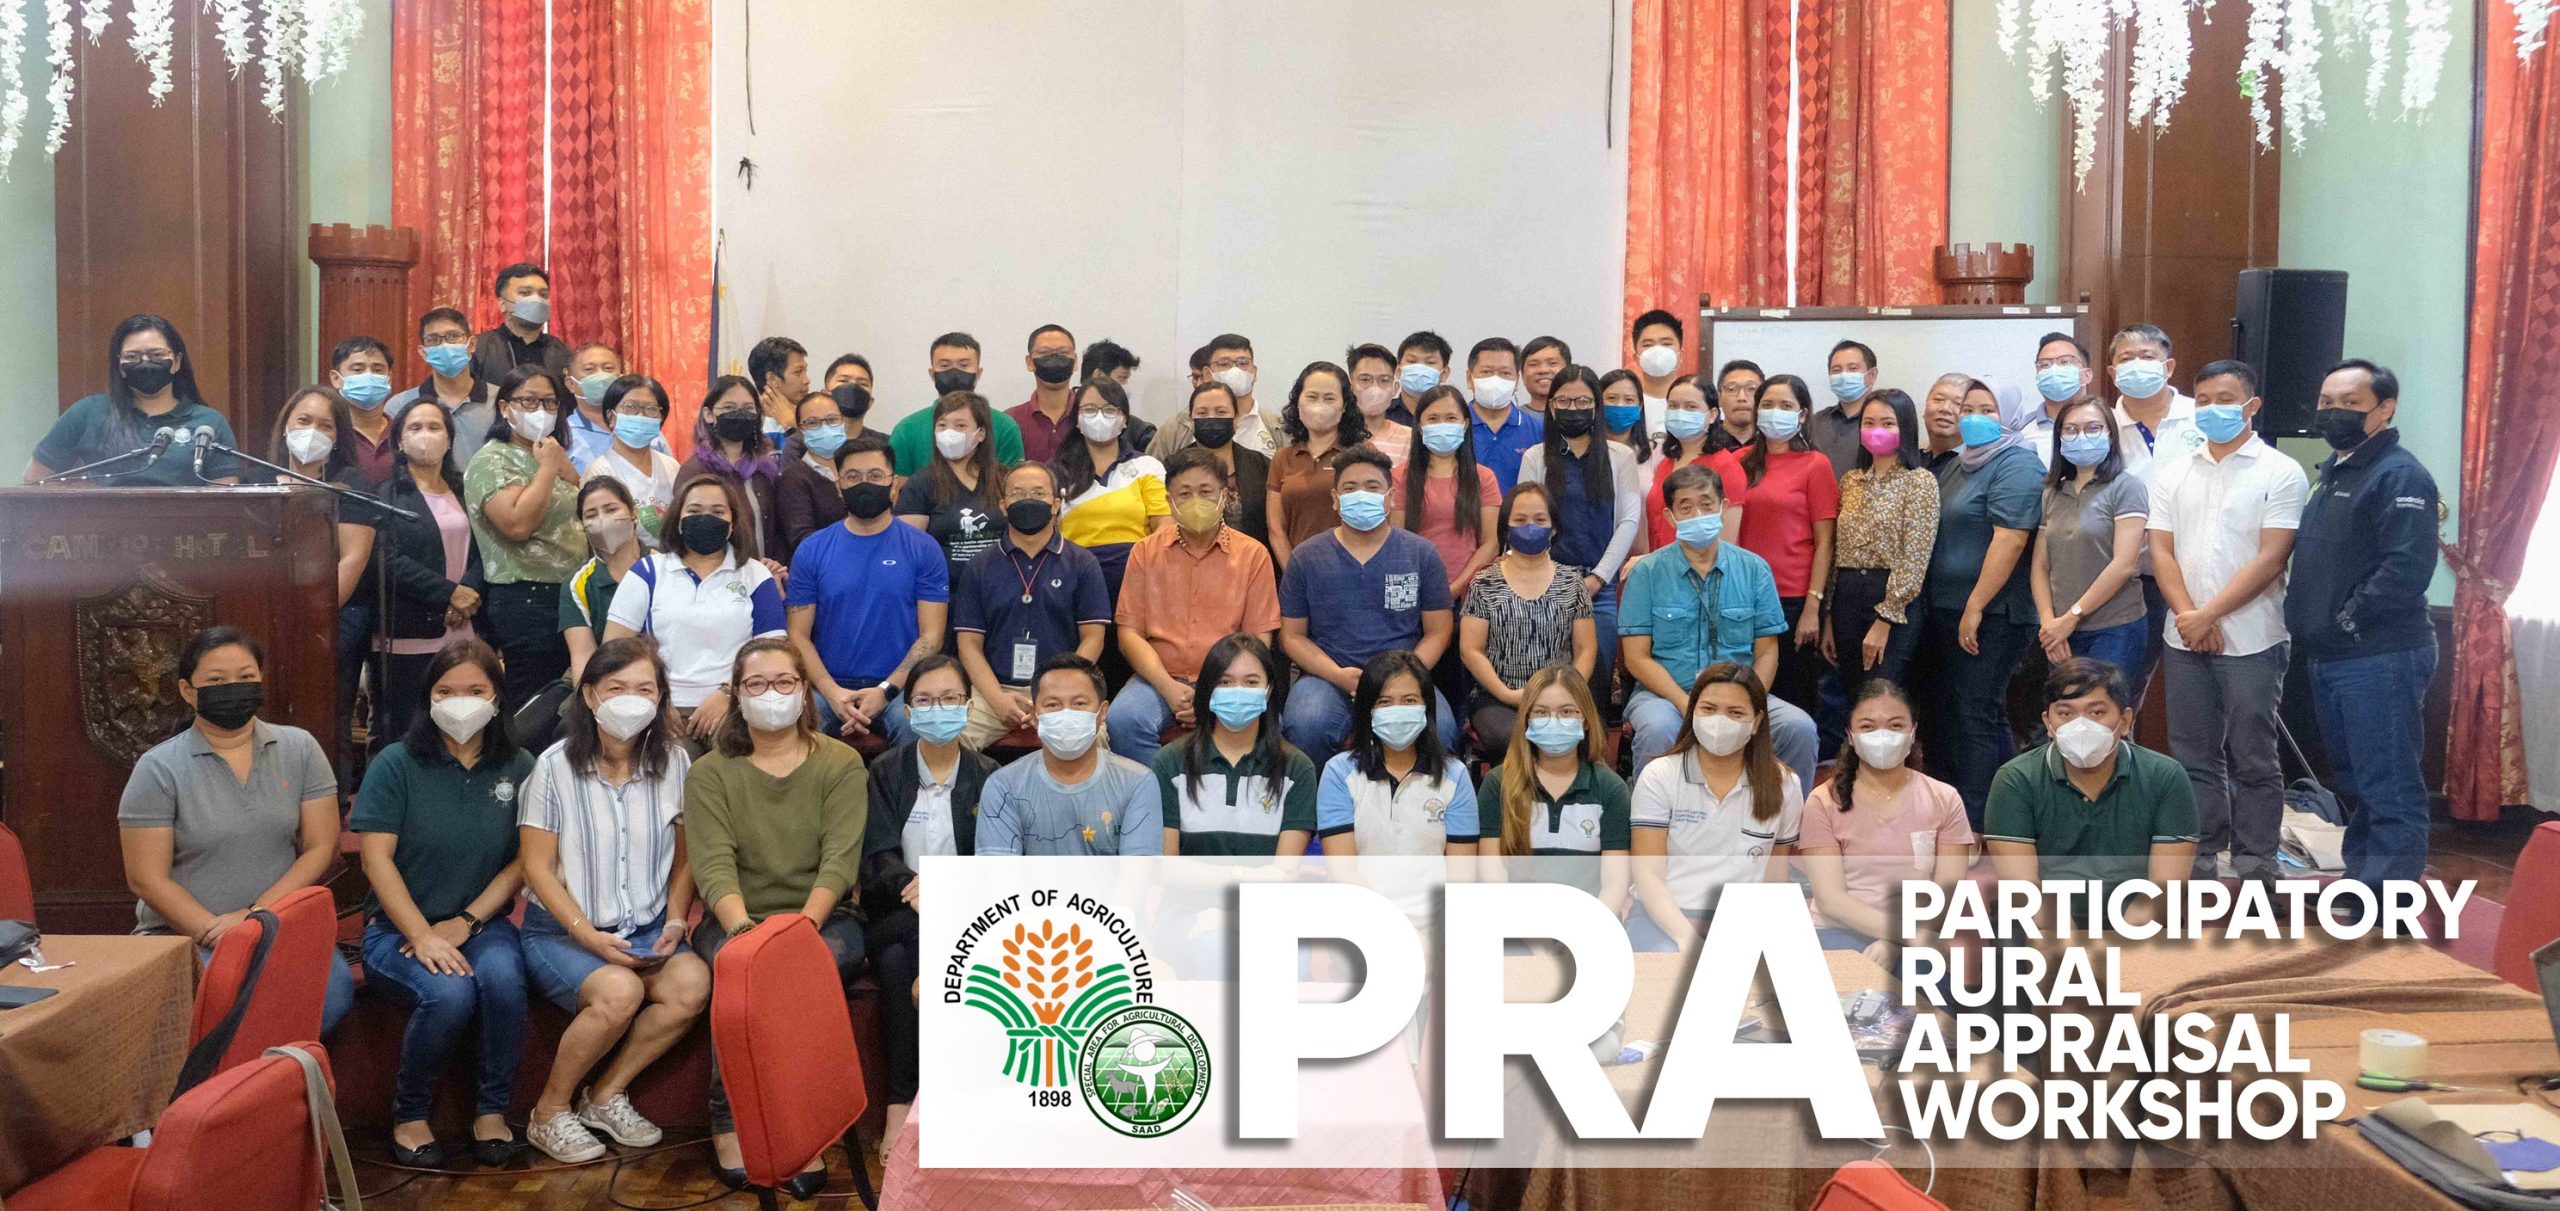 SAAD Program conducts PRA Workshop in preparation for Phase 2